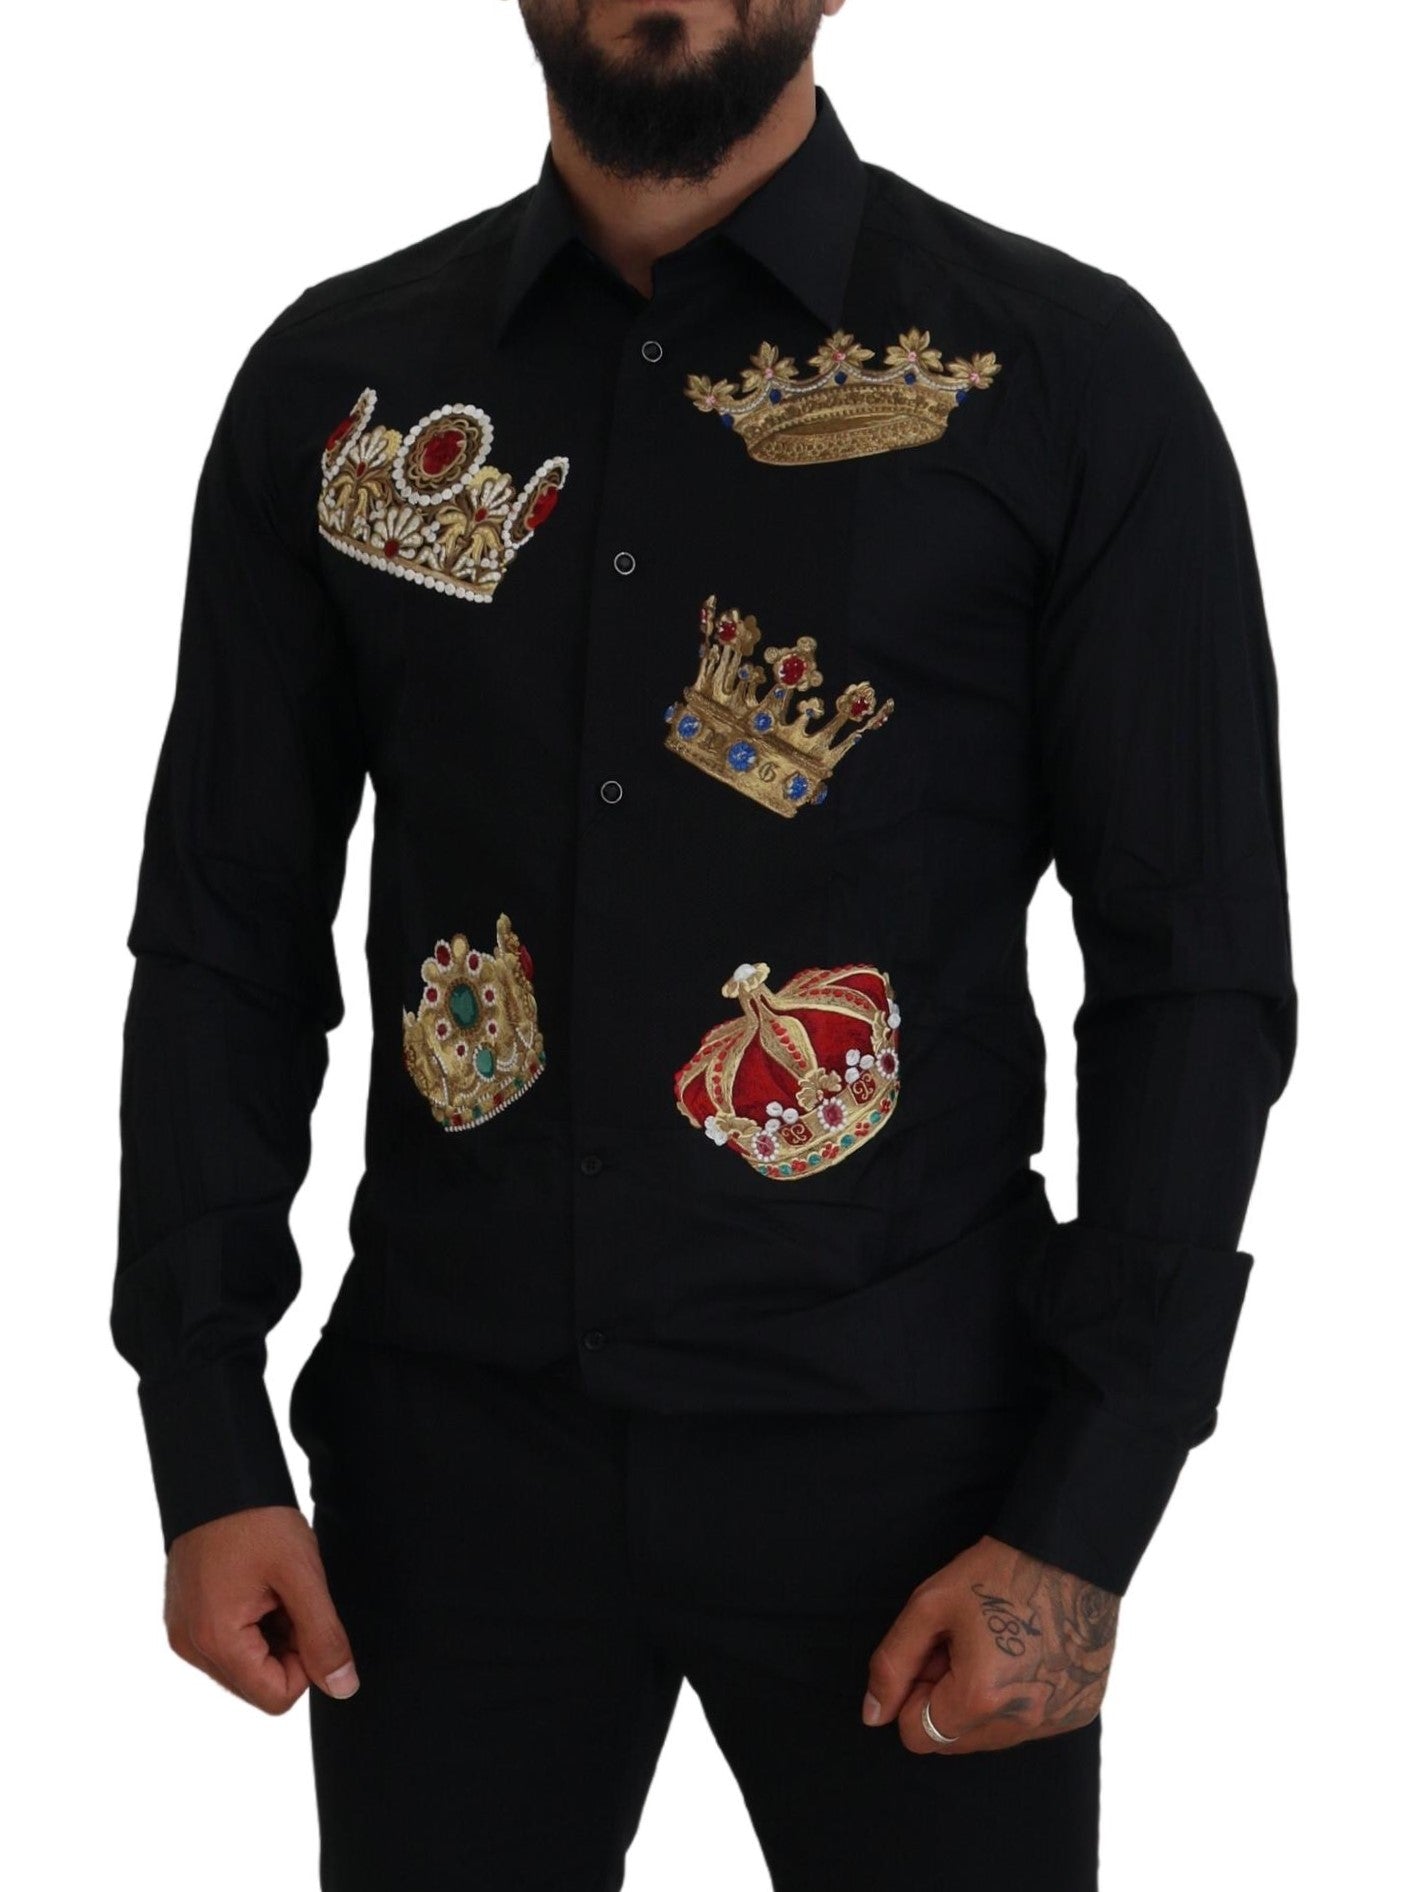 Elegant Black Slim Fit Dress Shirt with Crown Embroidery